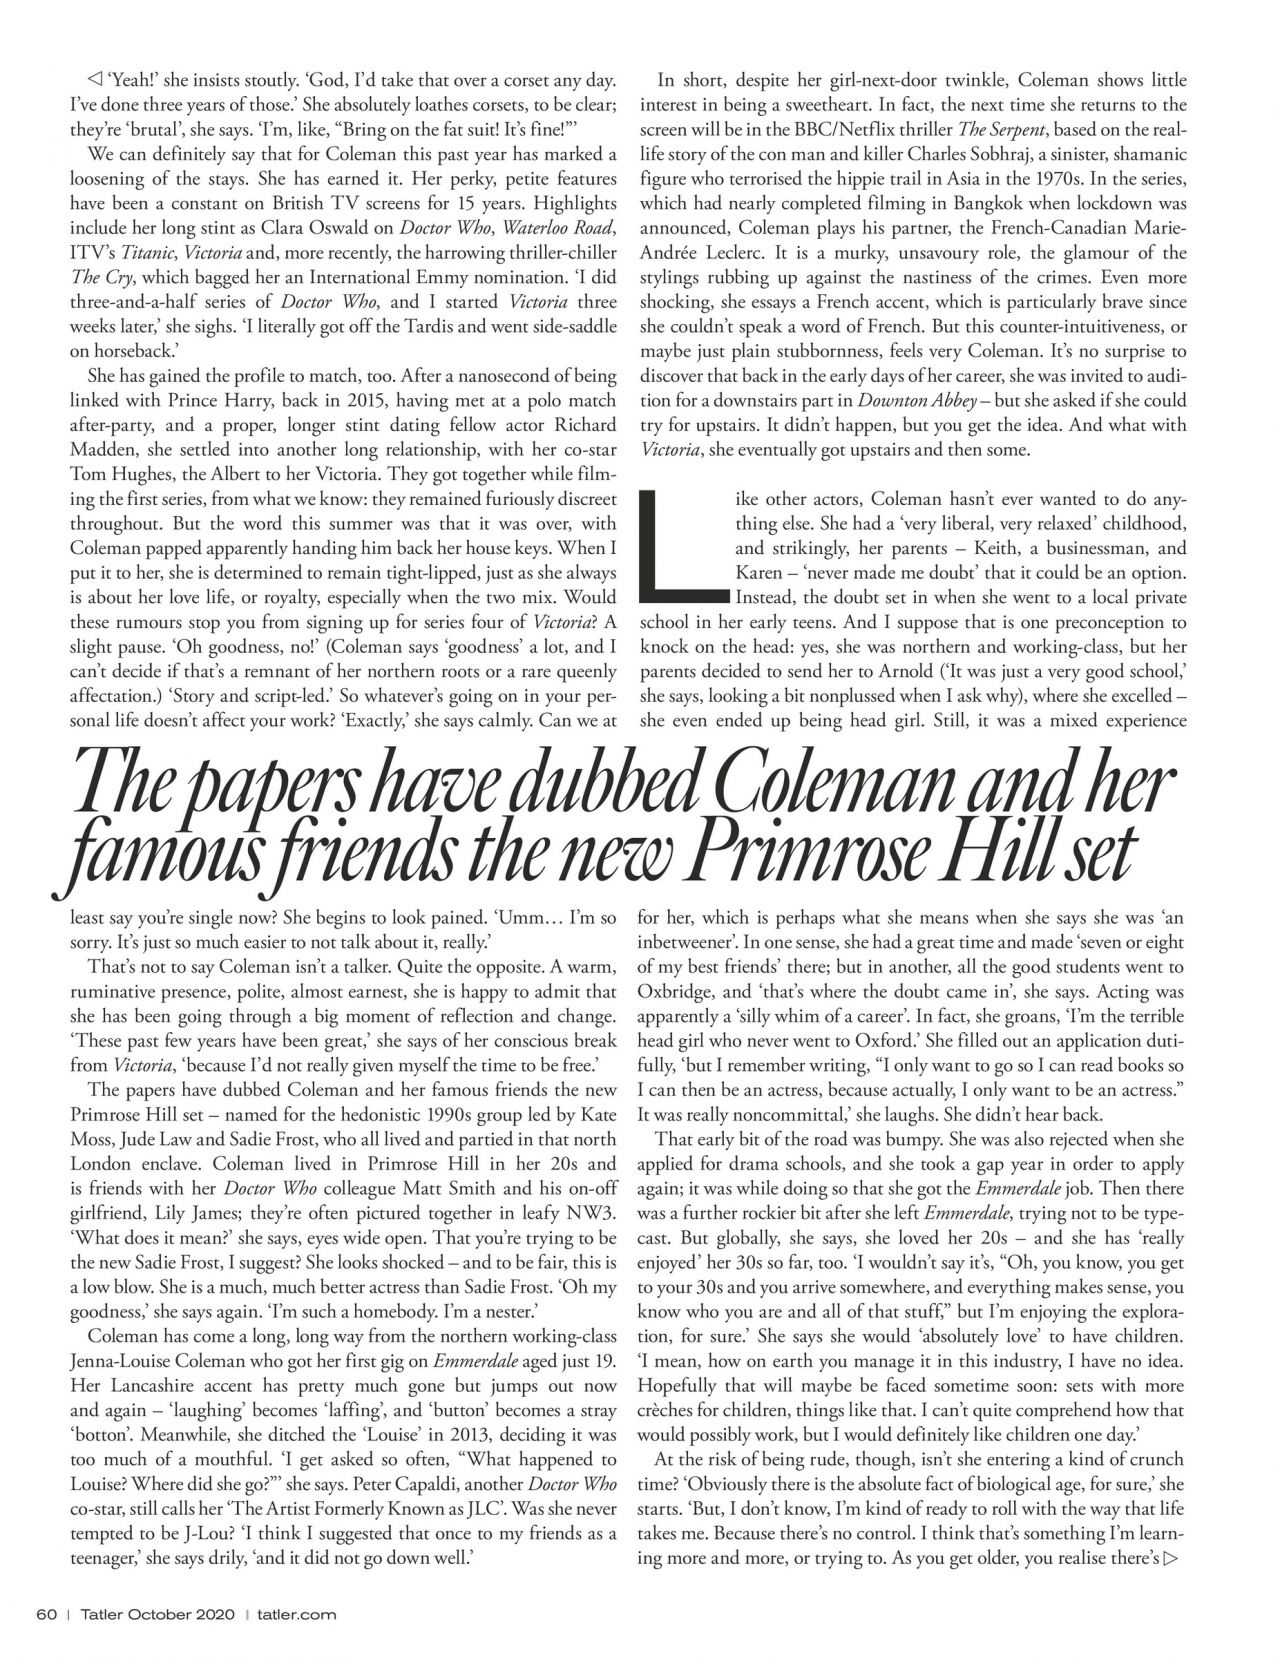 jenna-louise-coleman-tatler-magazine-october-2020-issue-4.jpg